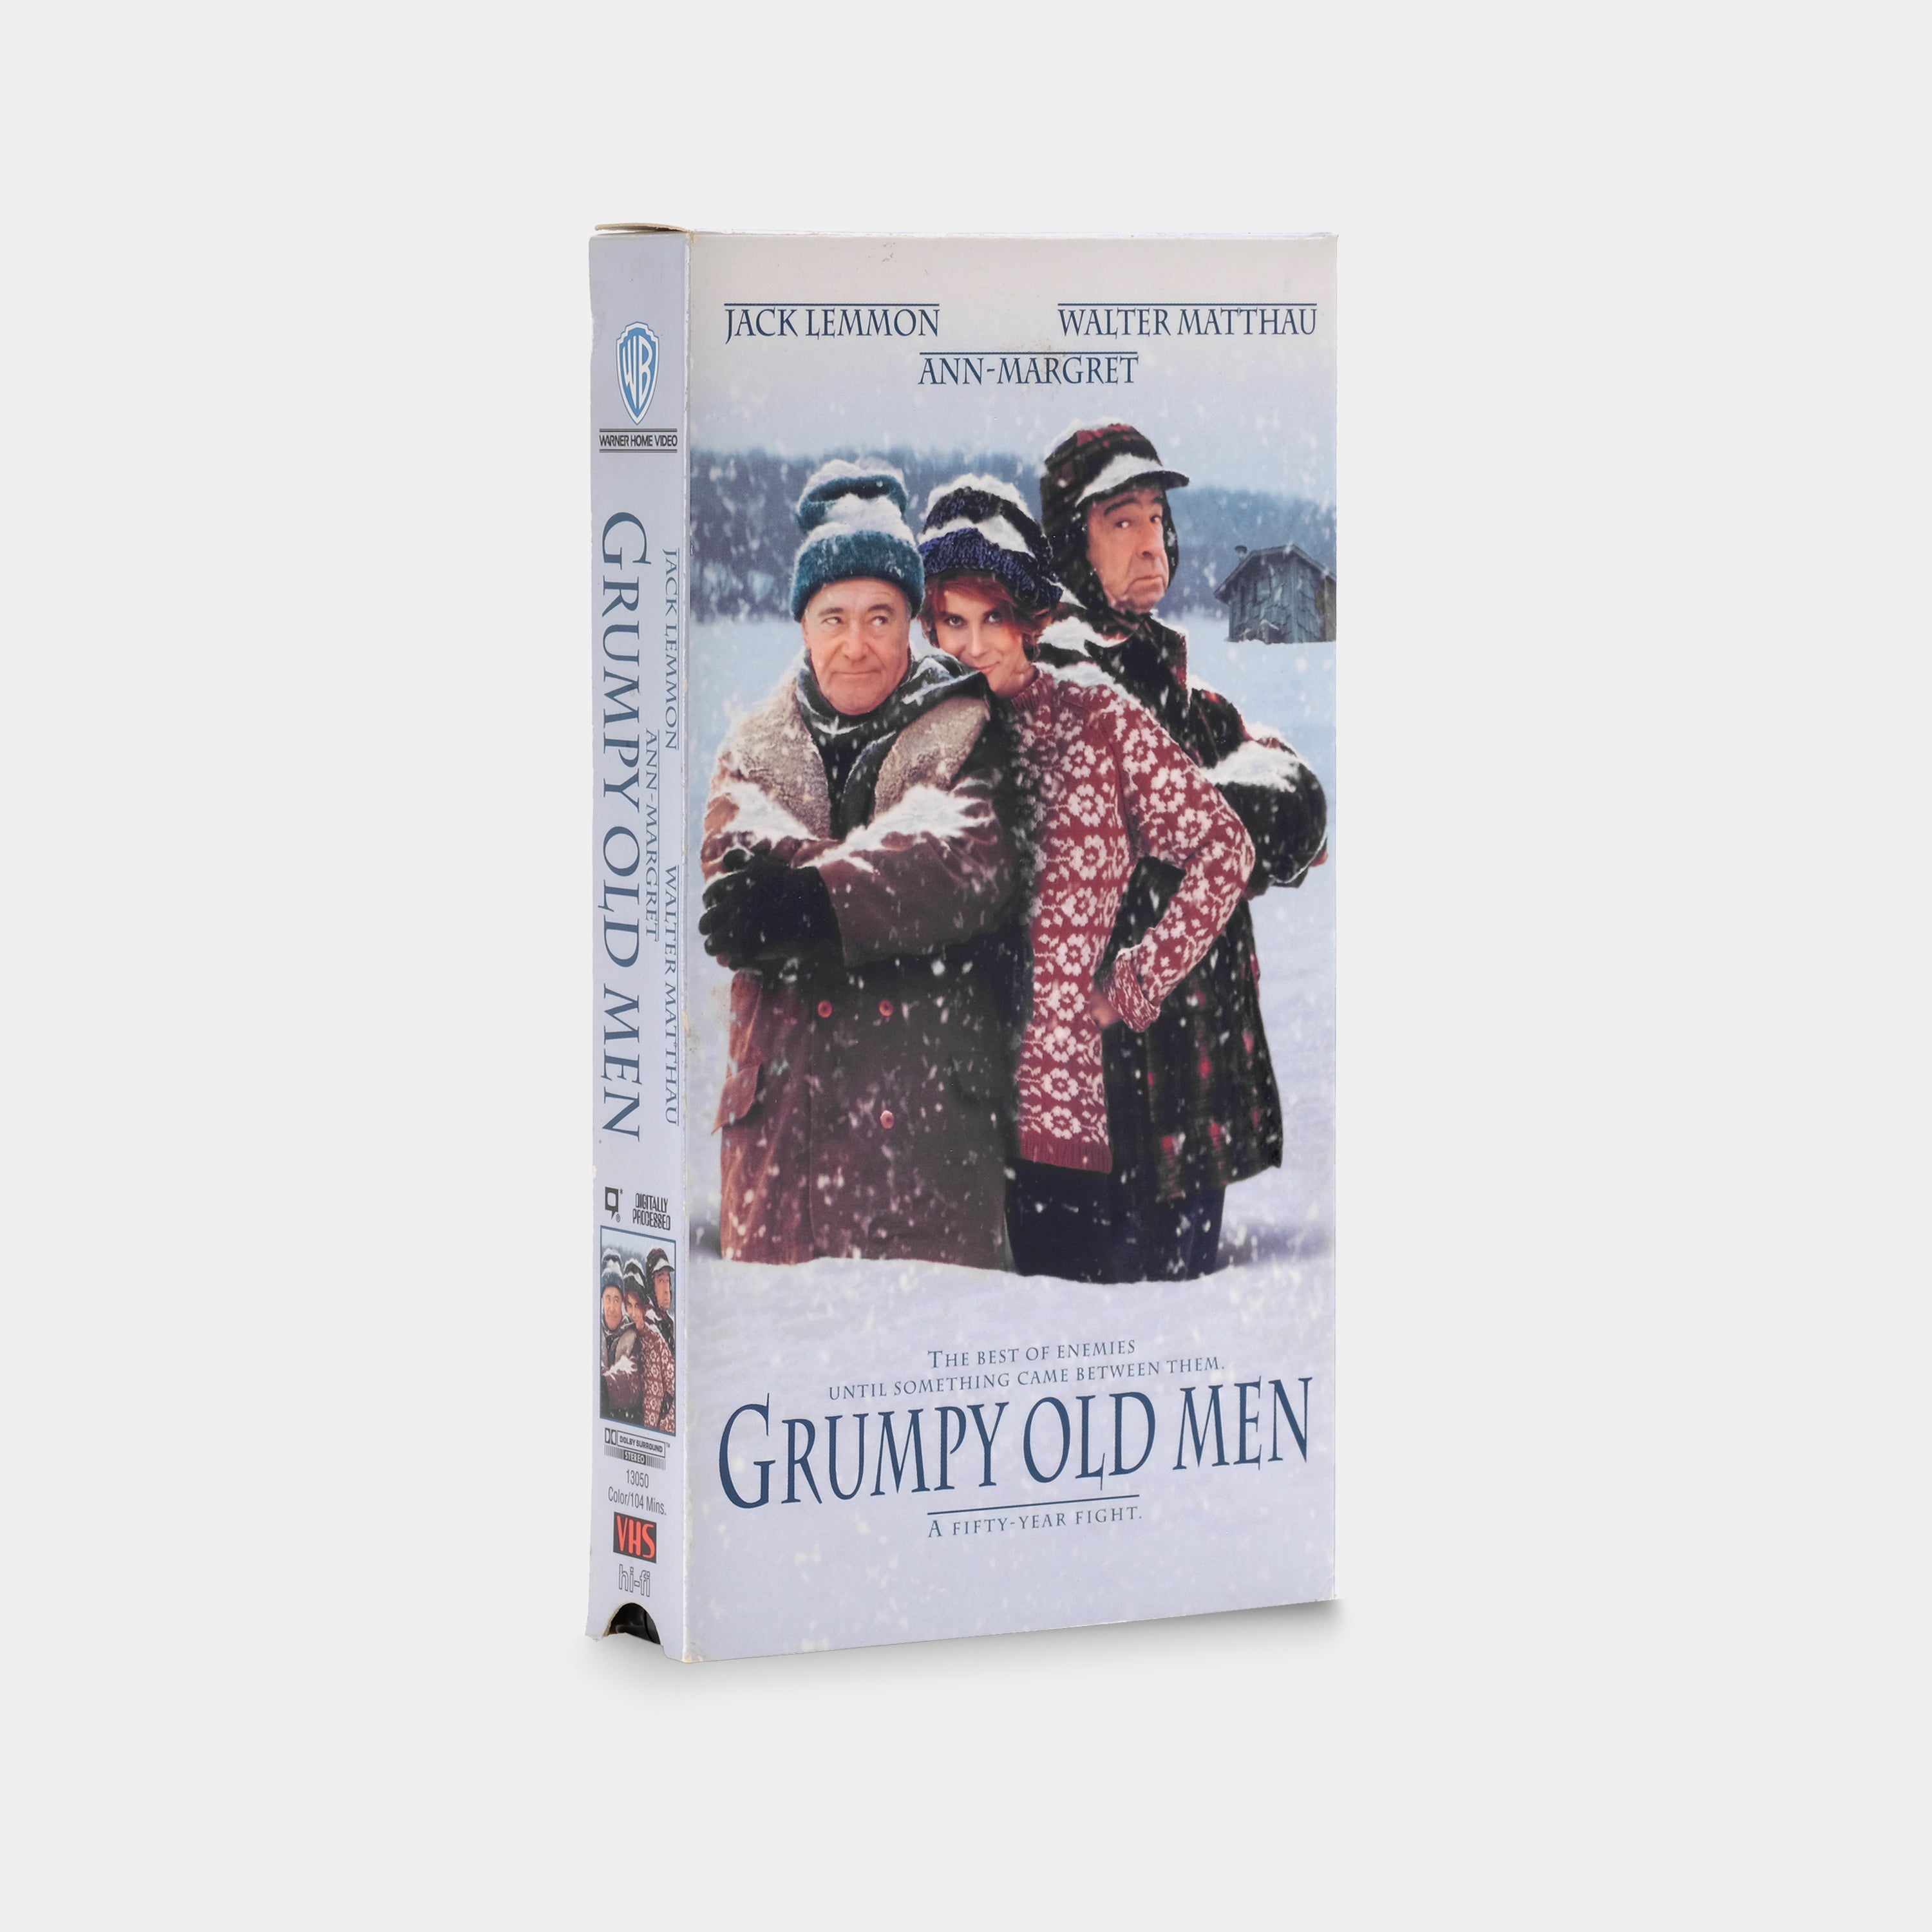 Grumpy Old Men VHS Tape